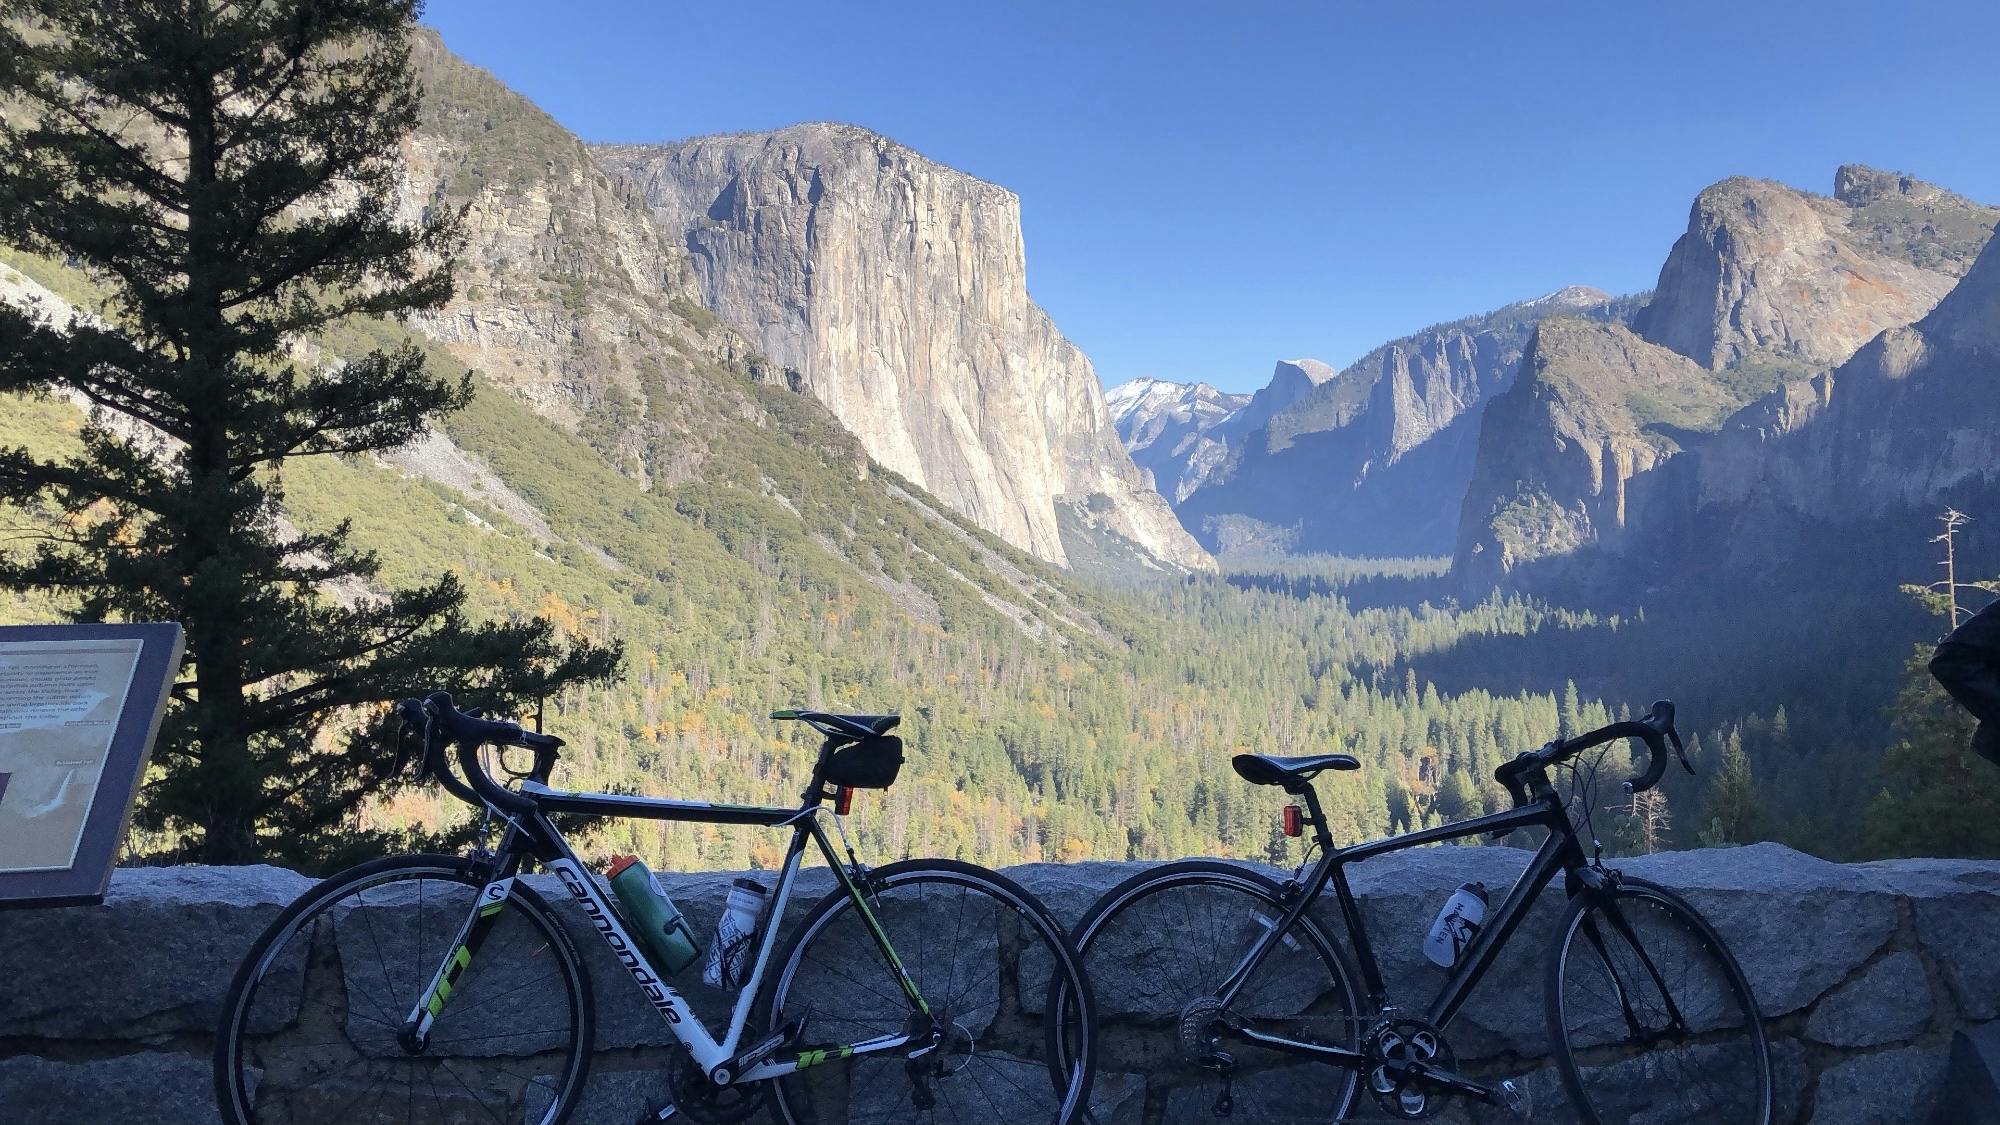 Yosemite bike ride! 